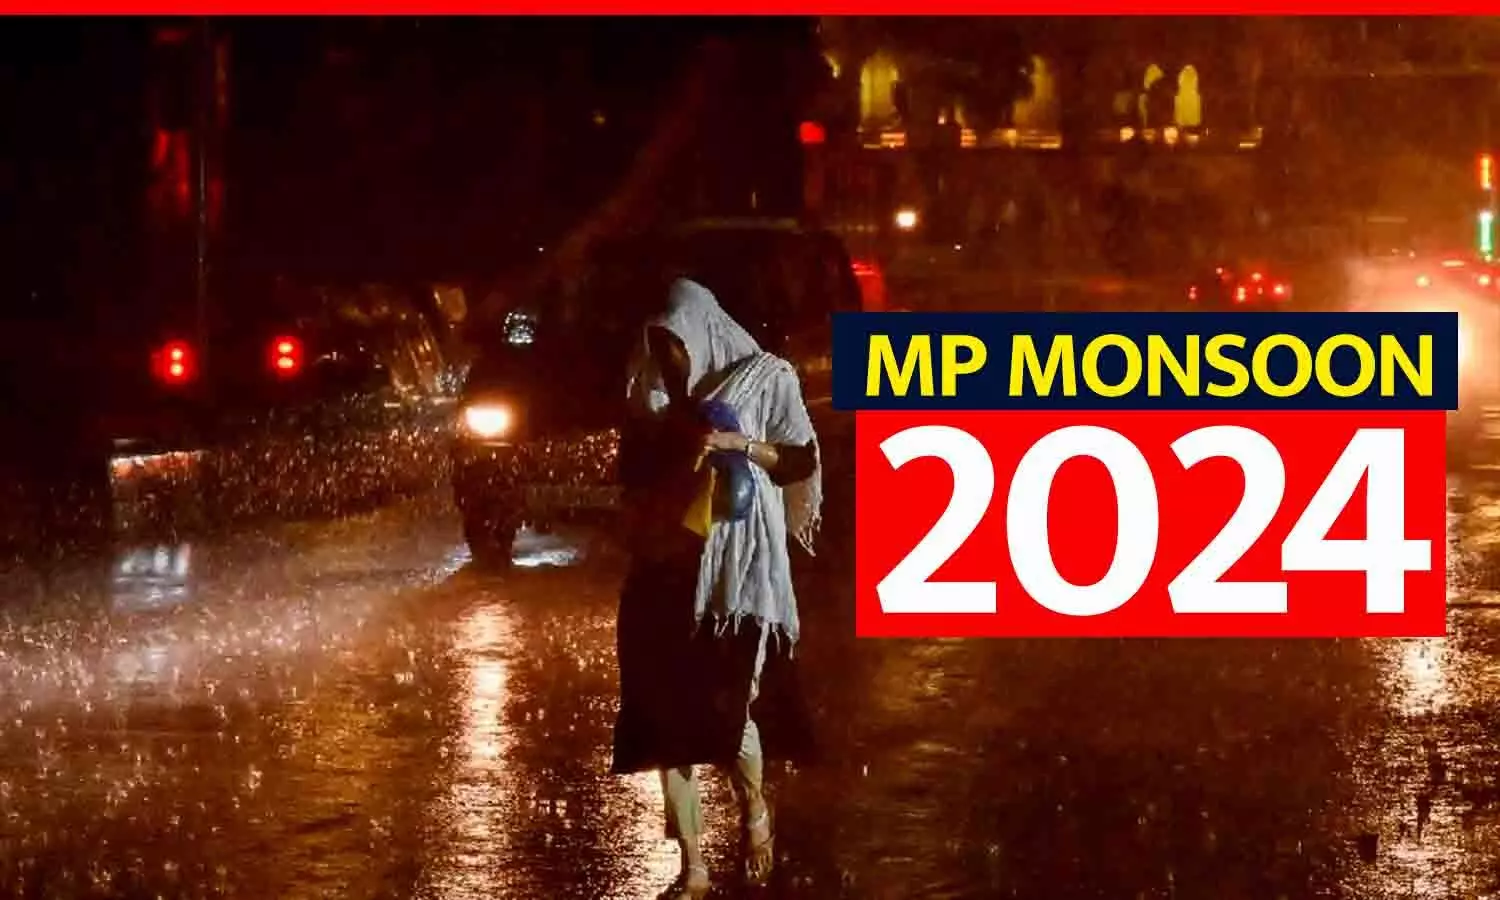 MP MONSOON 2024